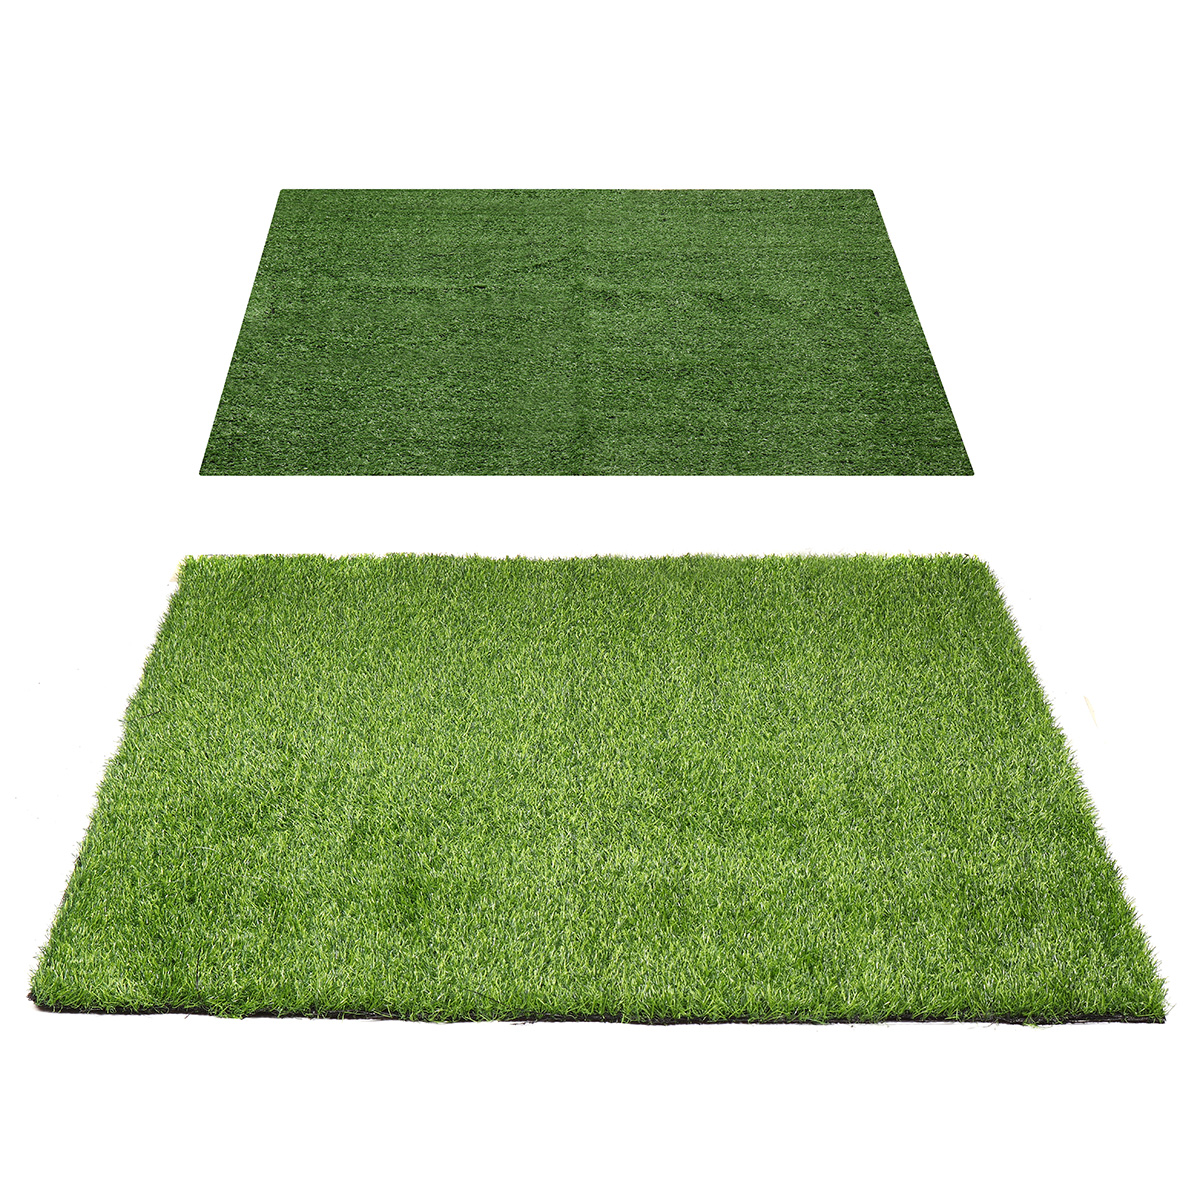 Artificial-Synthetic-Lawn-Turf-Plastic-Green-Plant-Grass-Garden-Decor-1694876-2